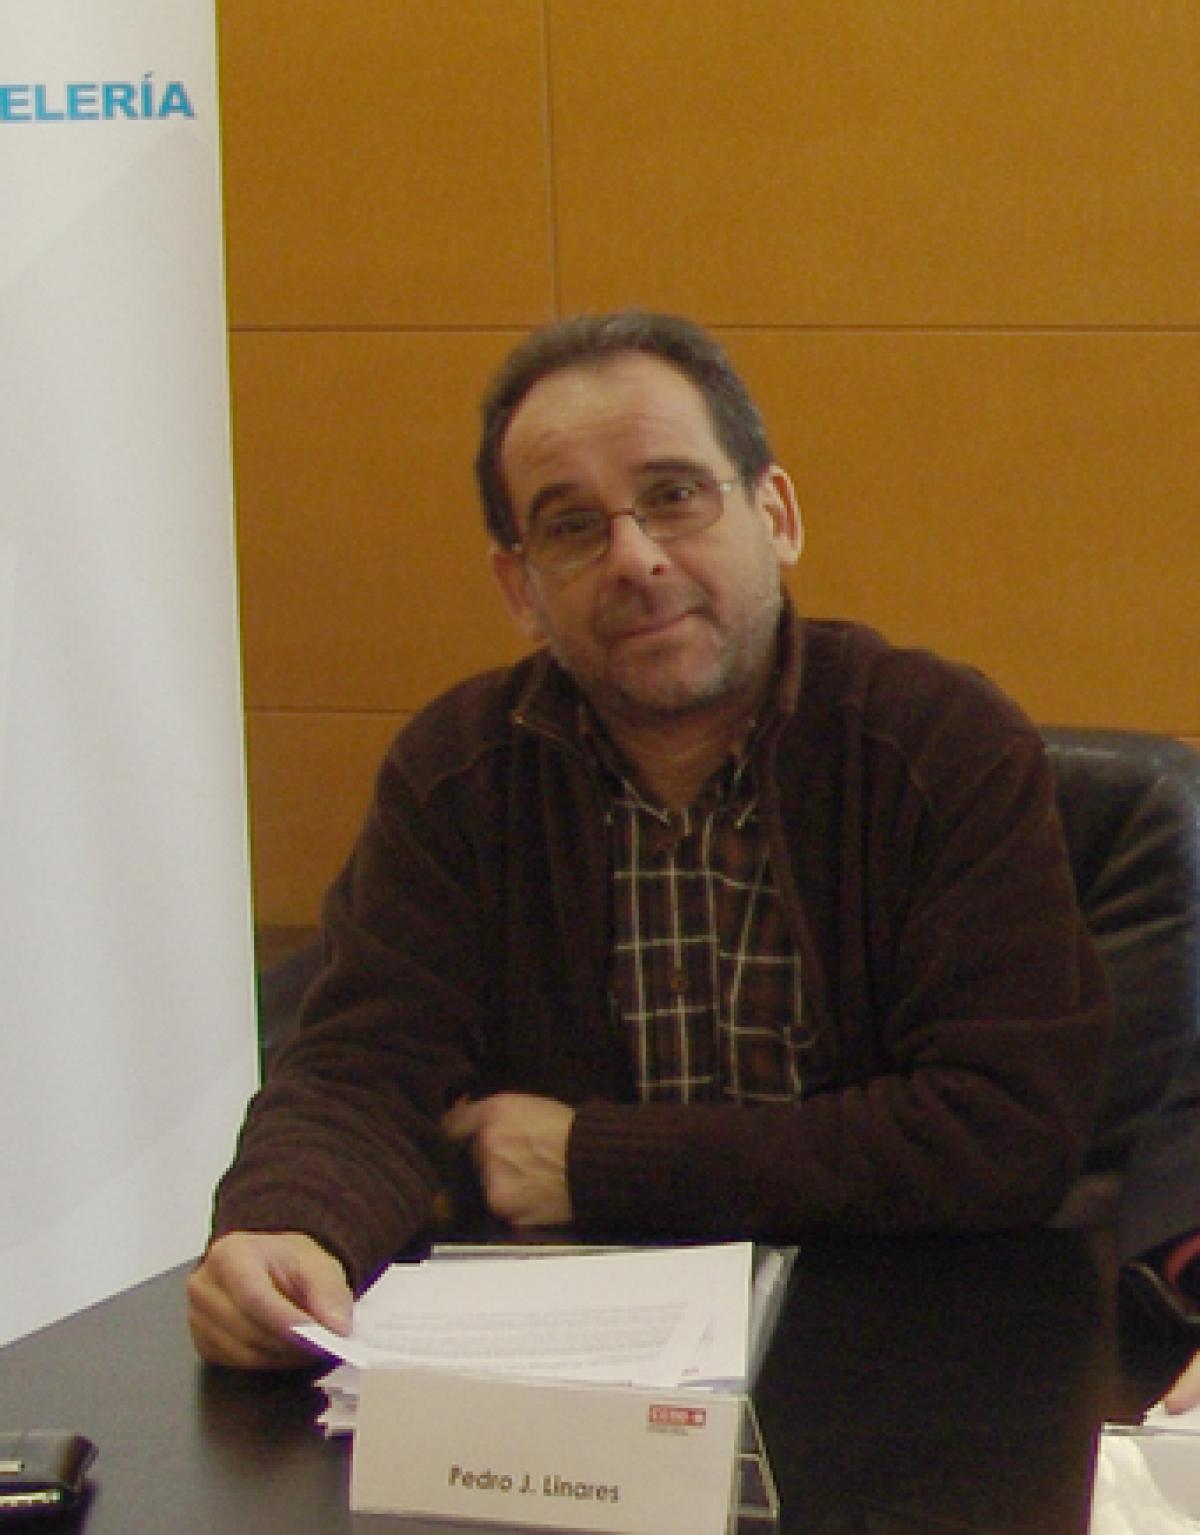 Pedro J. Linares